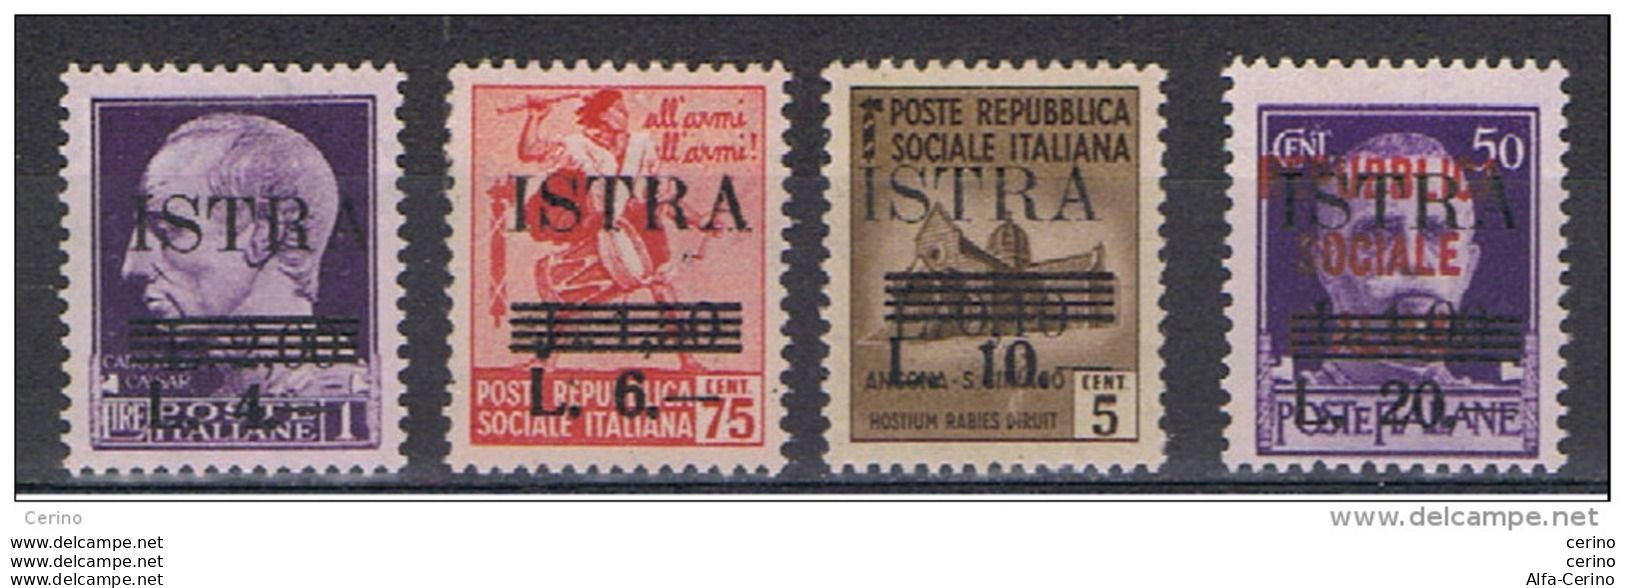 ISTRIA - OCC. JUGOSLAVA:  1945  SOPRSTAMPATI  -  S. CPL. 4  VAL. N. -  SASS. 37/40 - Yugoslavian Occ.: Istria